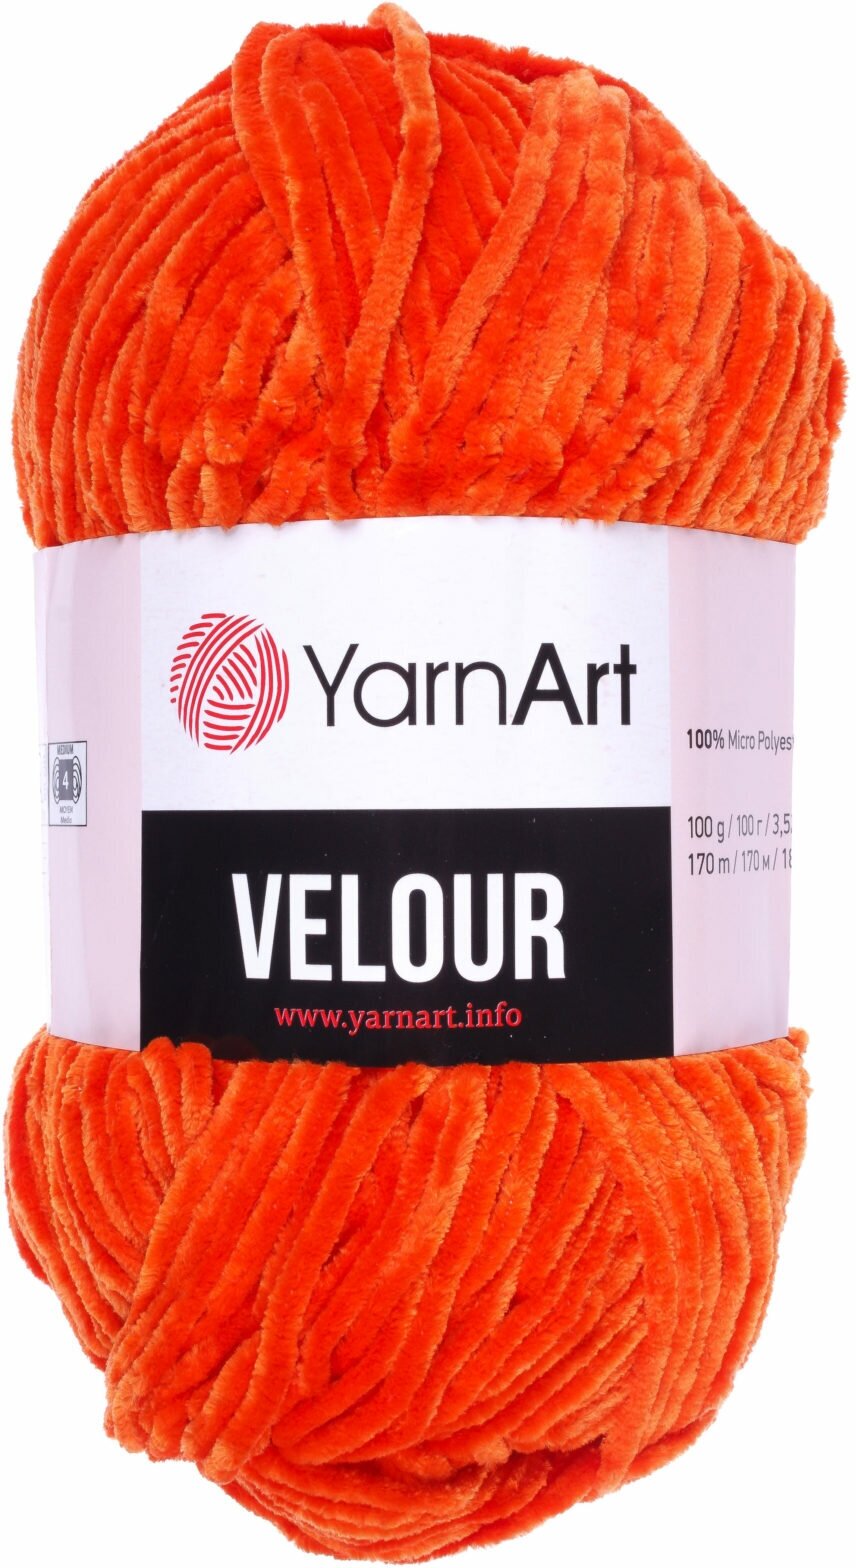  YarnArt Velour  (865), 100%, 170, 100, 1